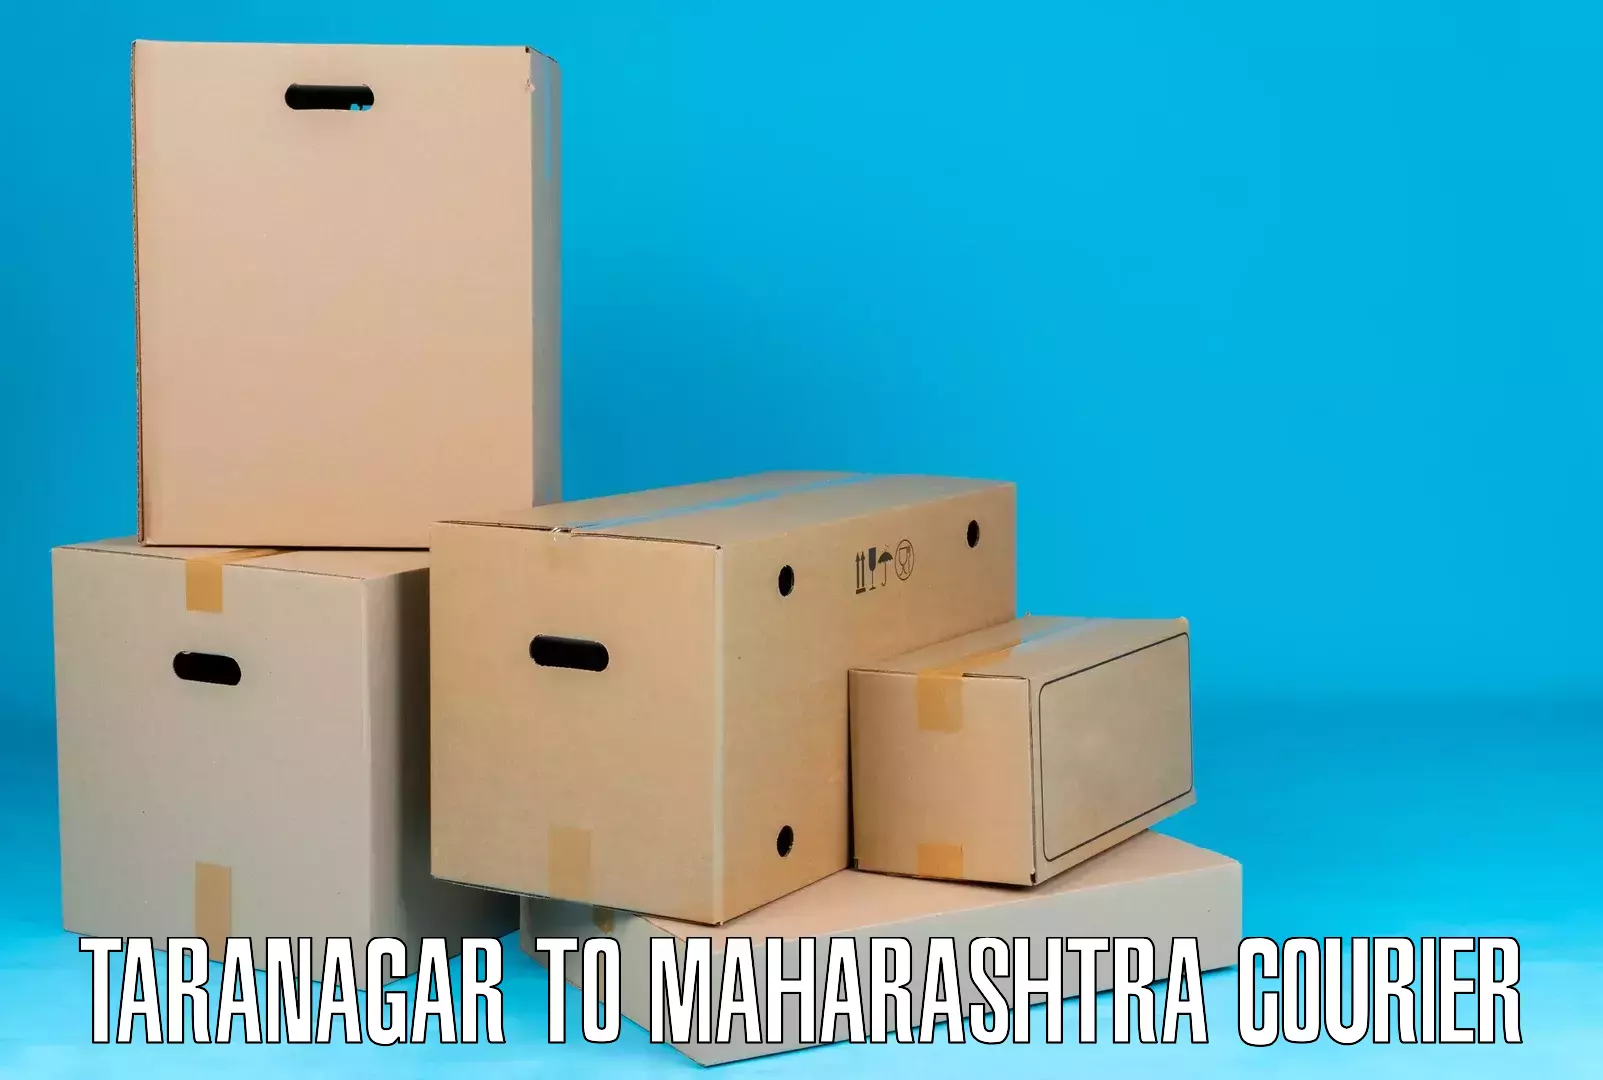 Ocean freight courier Taranagar to Vasmat